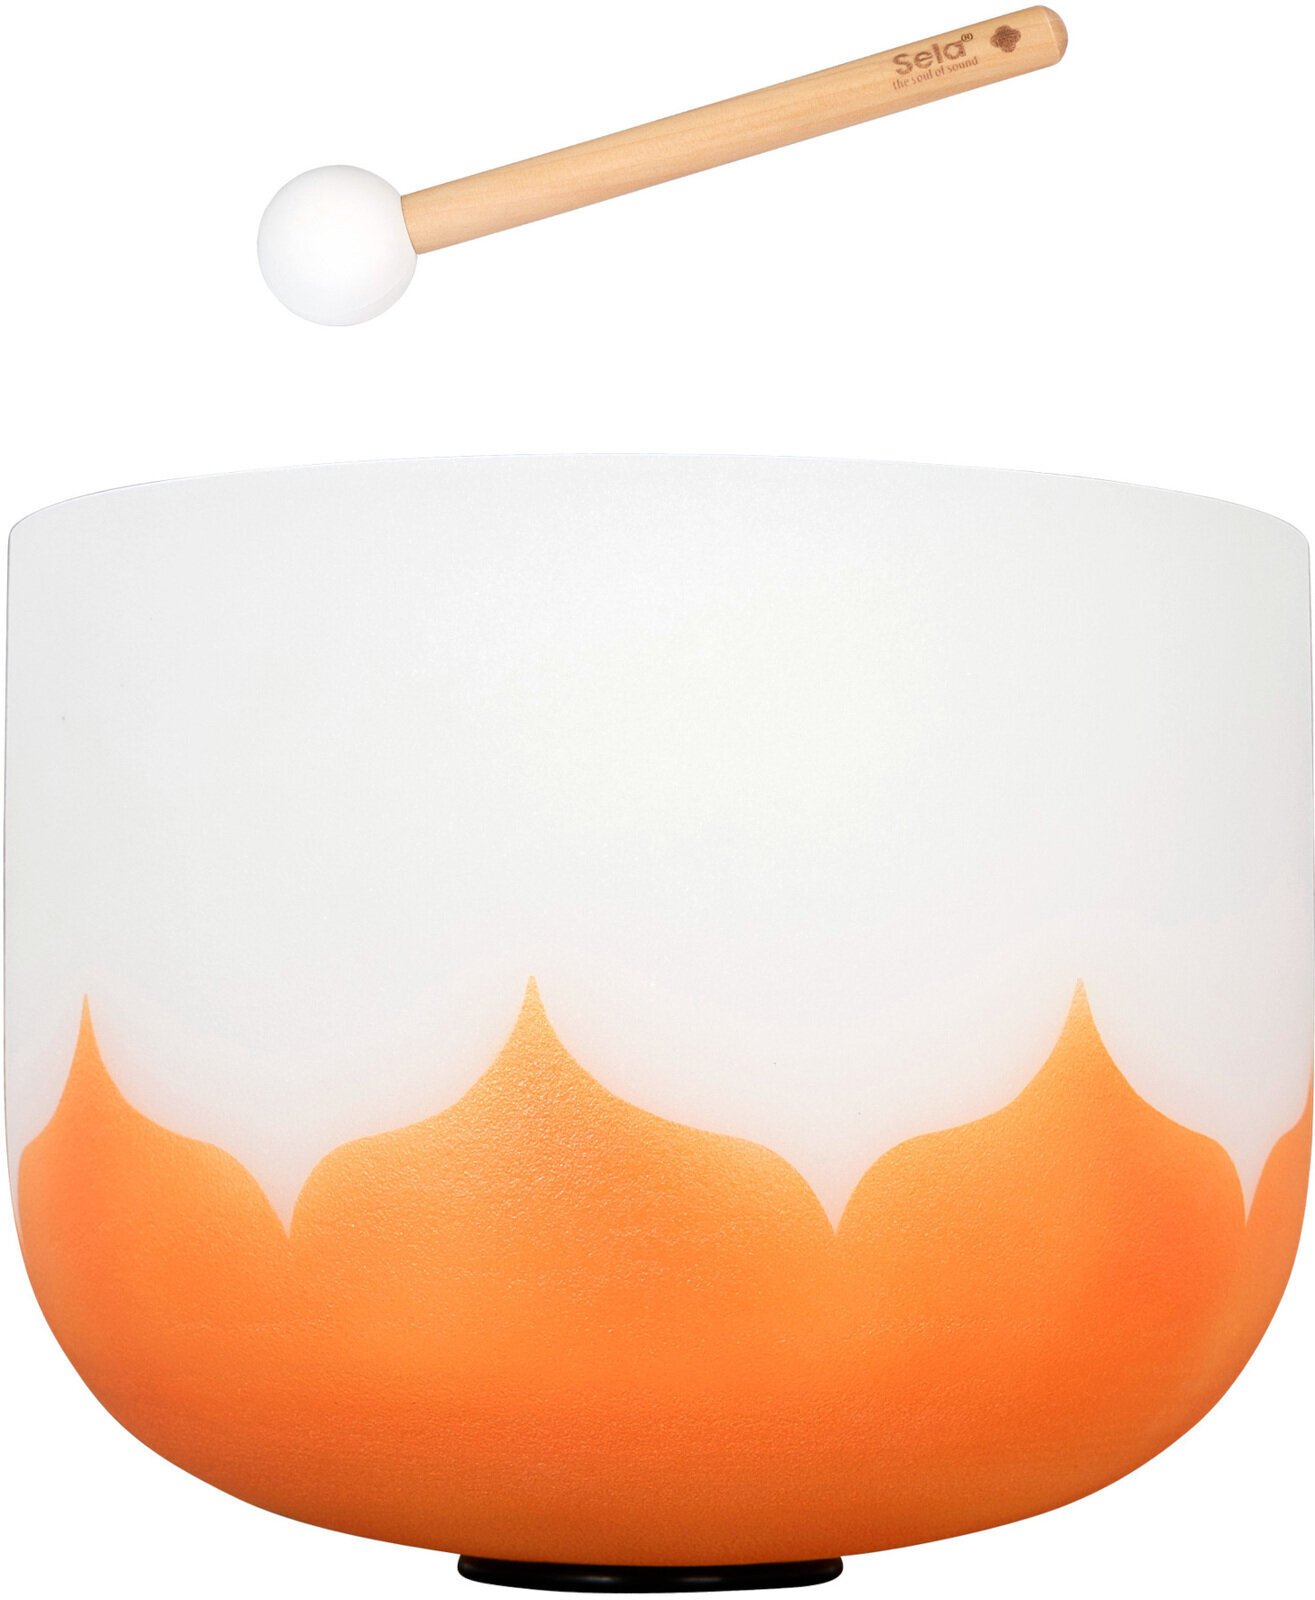 Percussion for music therapy Sela 13“ Crystal Singing Bowl Set Lotus 432Hz D - Orange (Sacral Chakra)